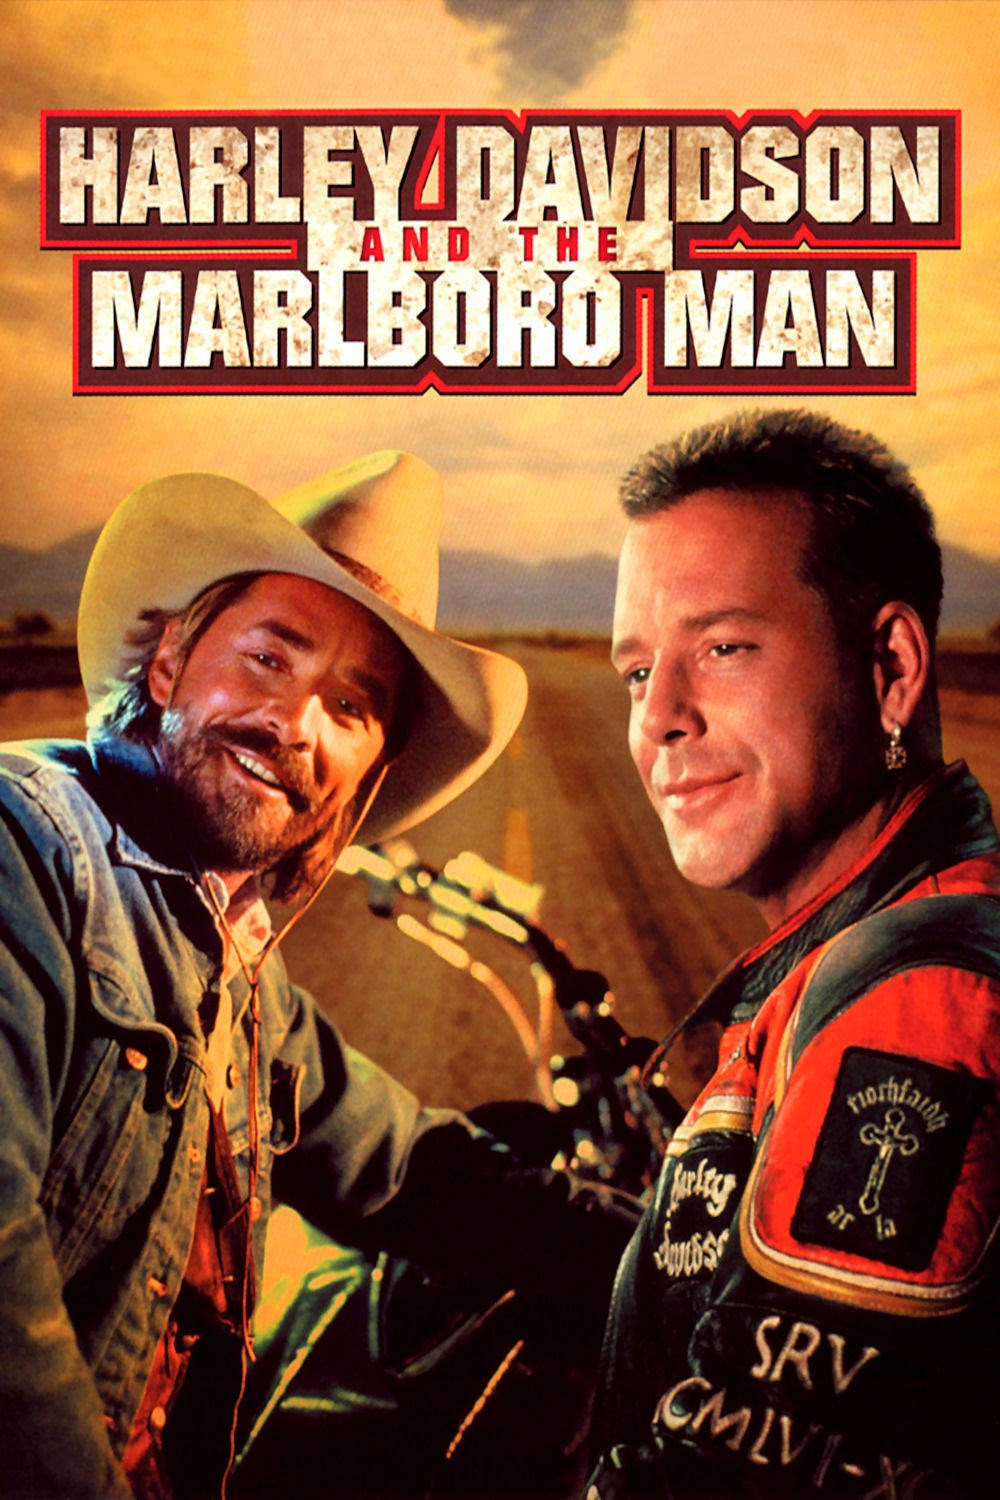 Harley Davidson & Marlboro Man [1991] - Watch latest movies - macsoftware